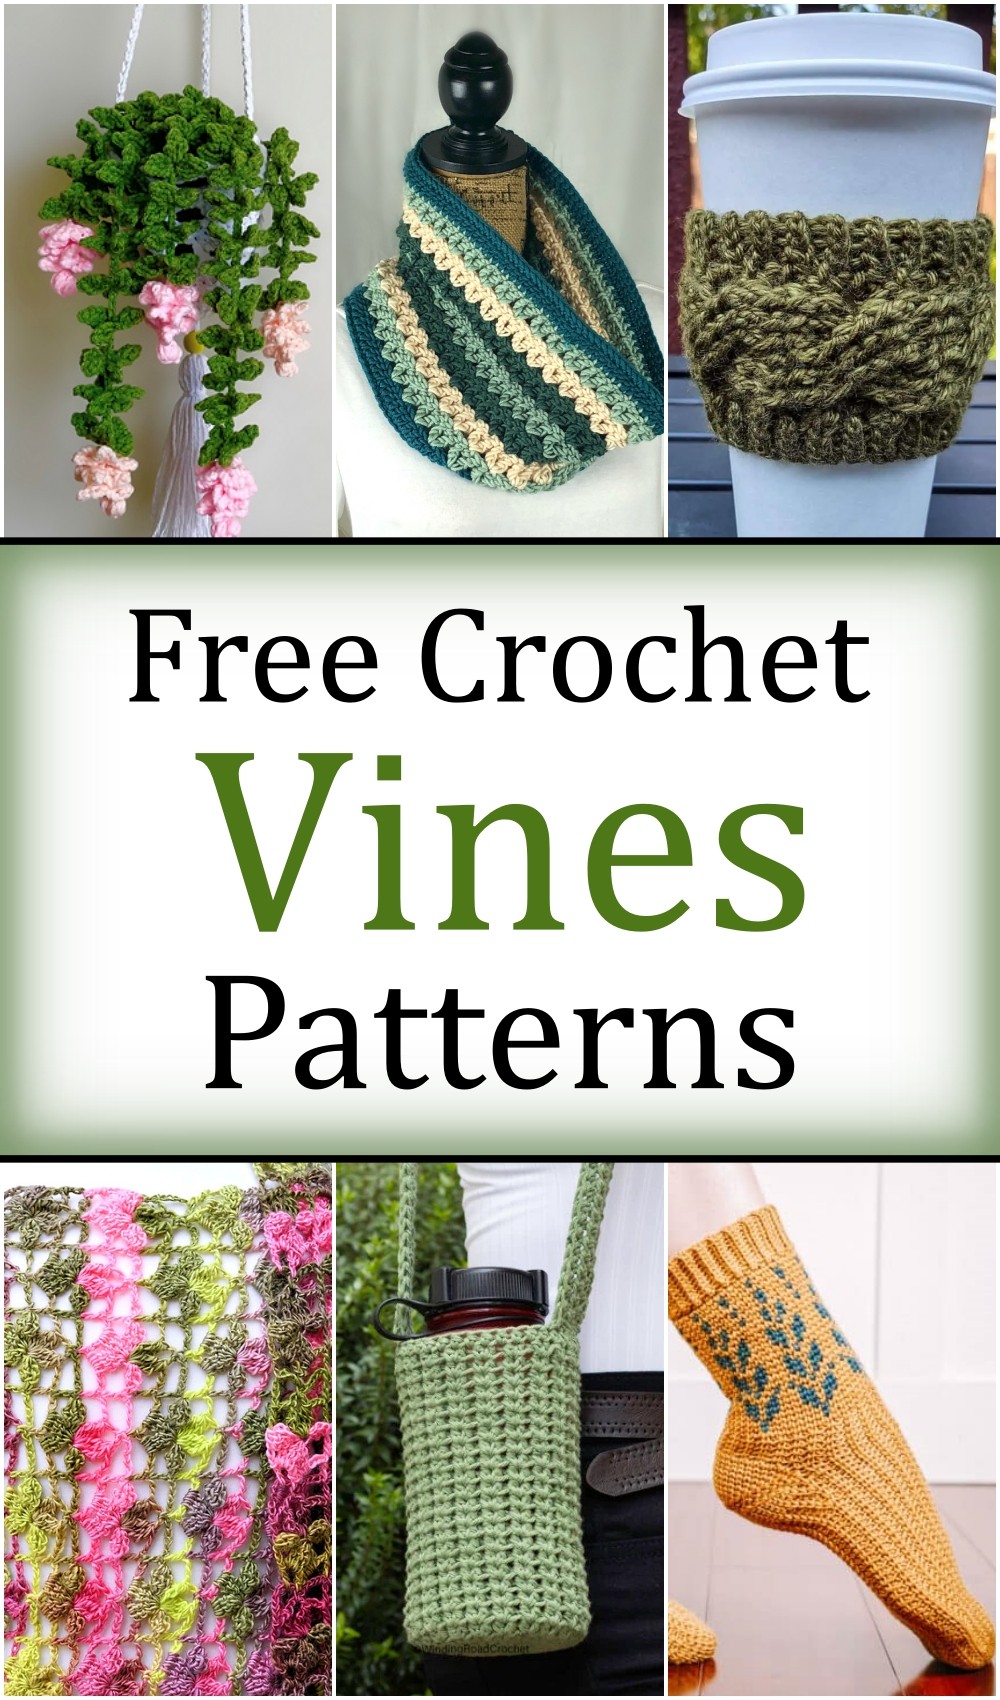 Free Crochet Vines Patterns